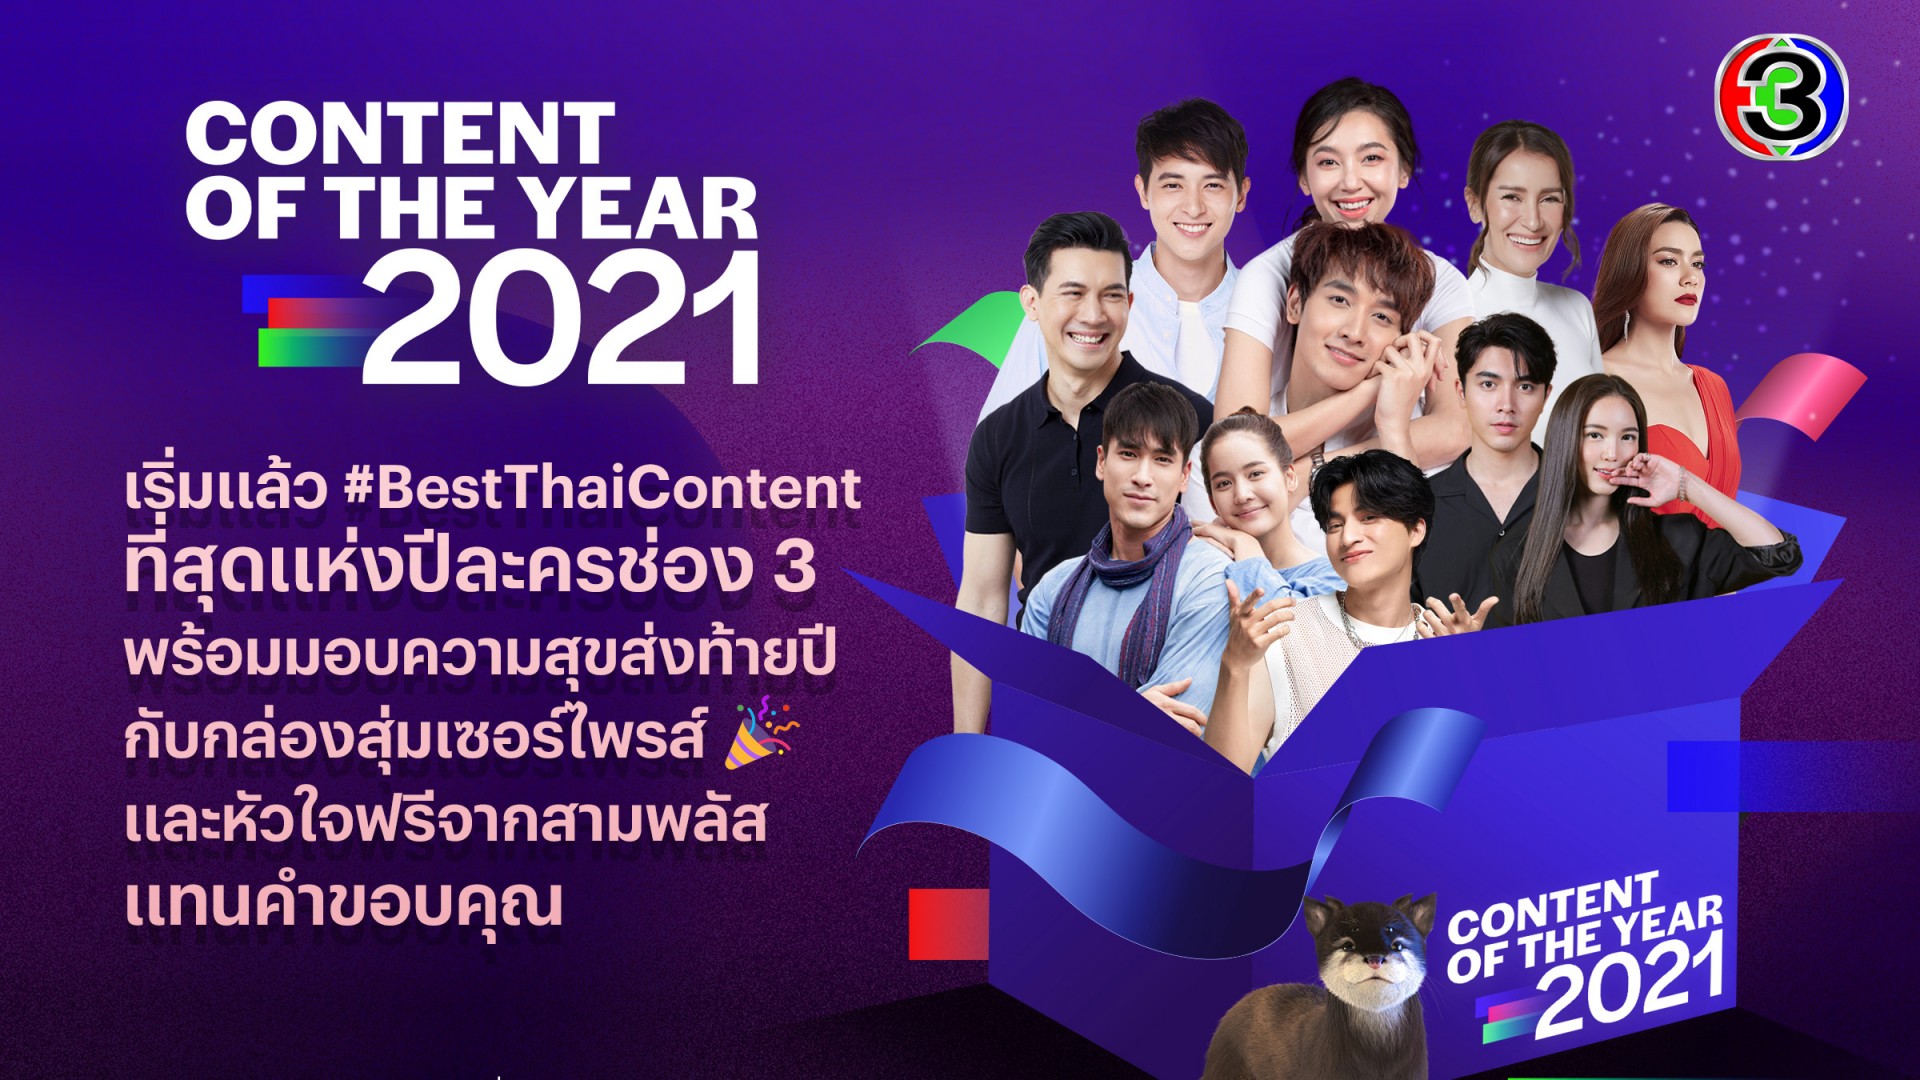 Content of the year 2021 รางวัลคอนเทนต์ละครสุดปังแห่งปี ช่อง 3